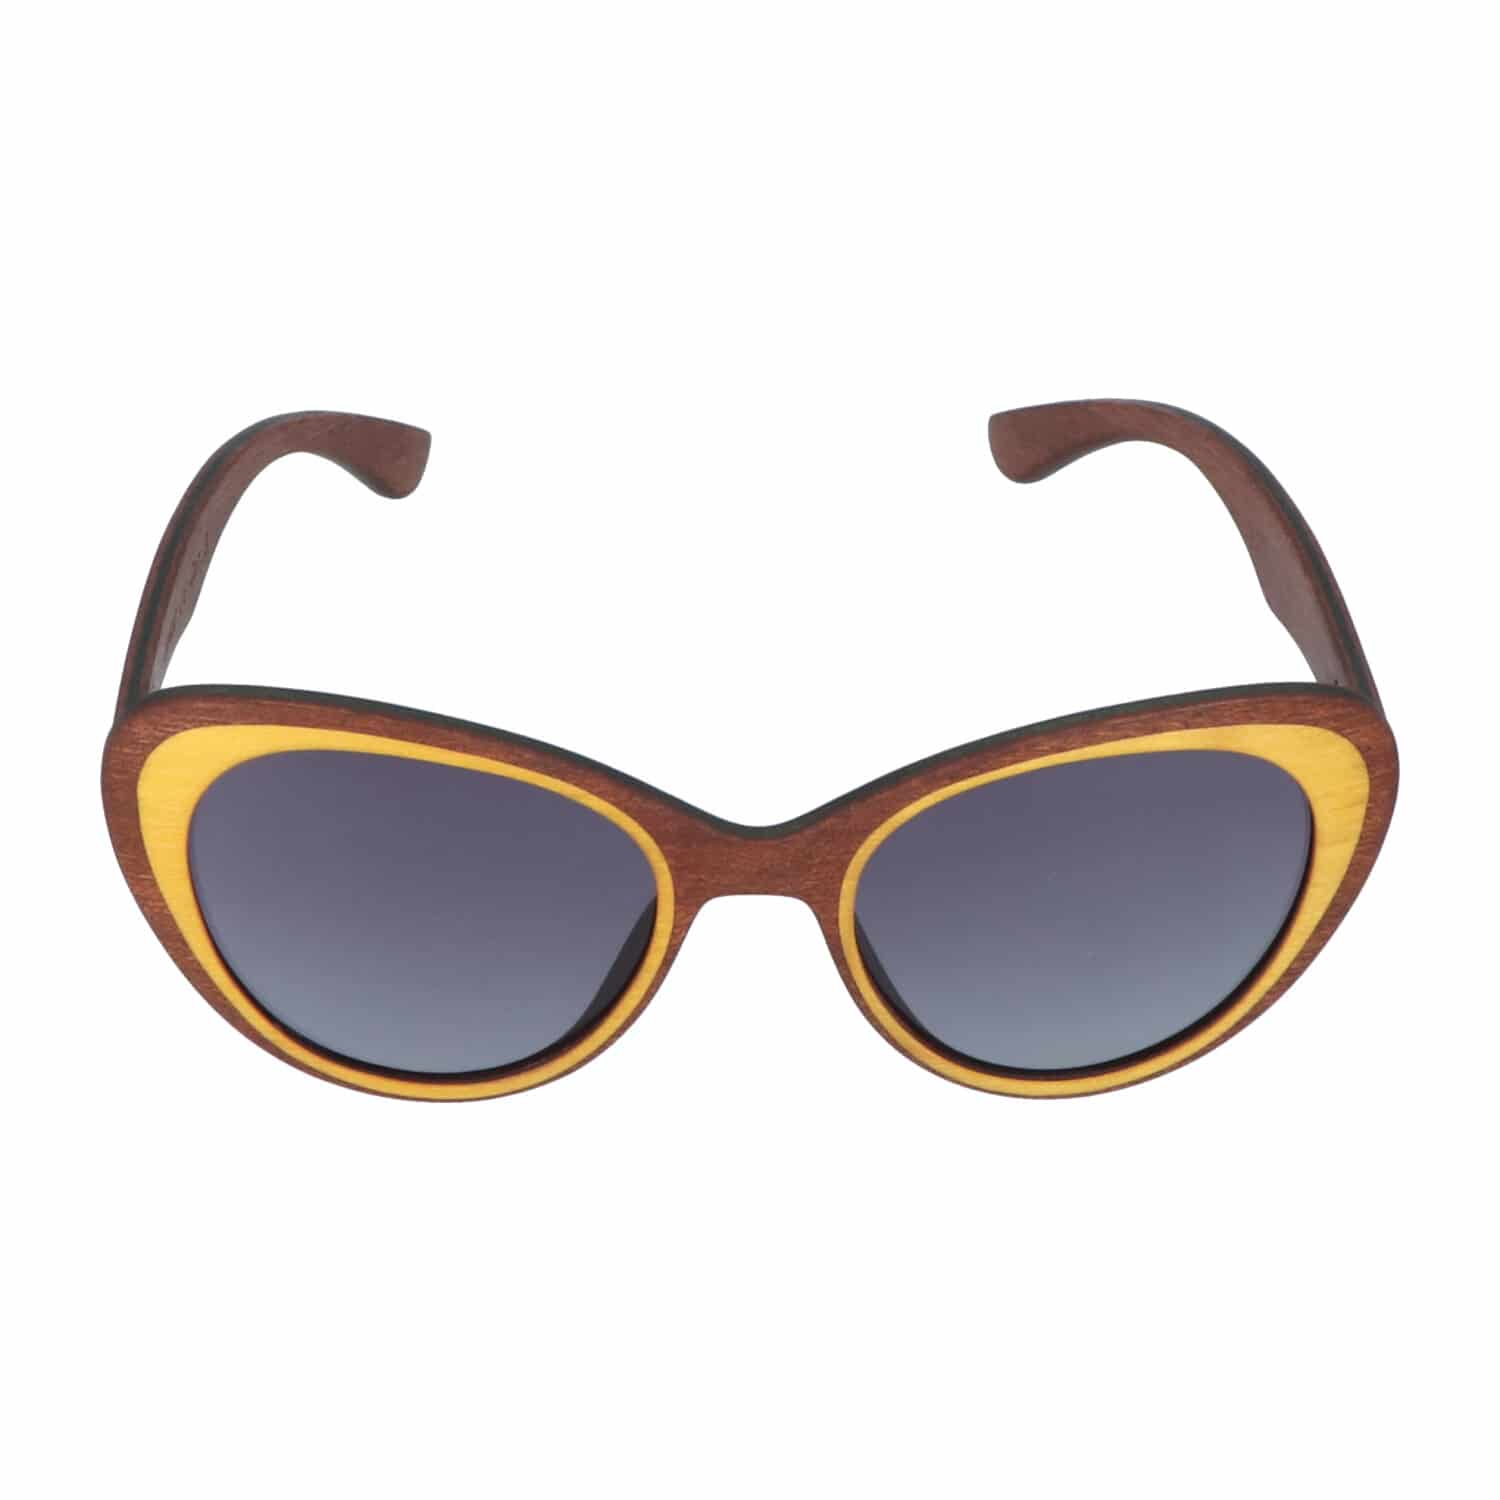 5one® Napoli - Houten Cateye dames zonnebril - grijze lens